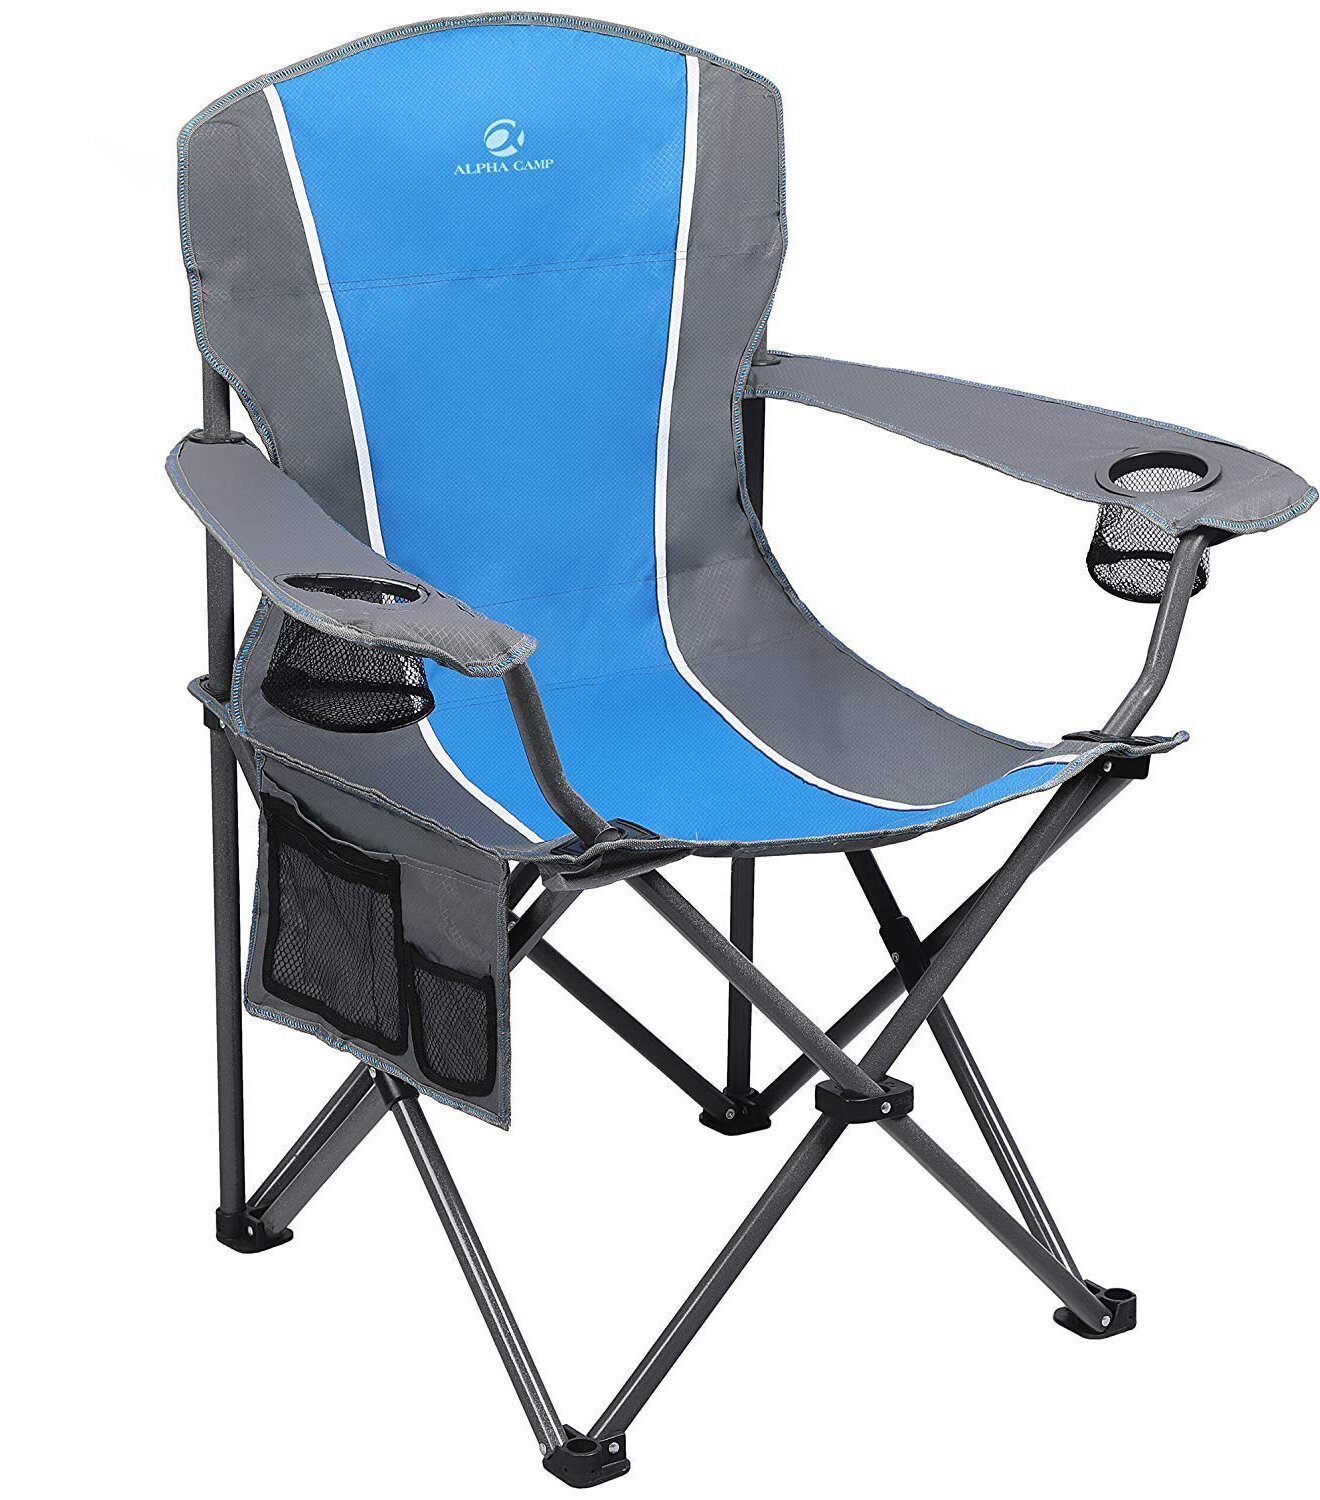 Alpha Camp Chair Sale, 54% OFF | www.pegasusaerogroup.com